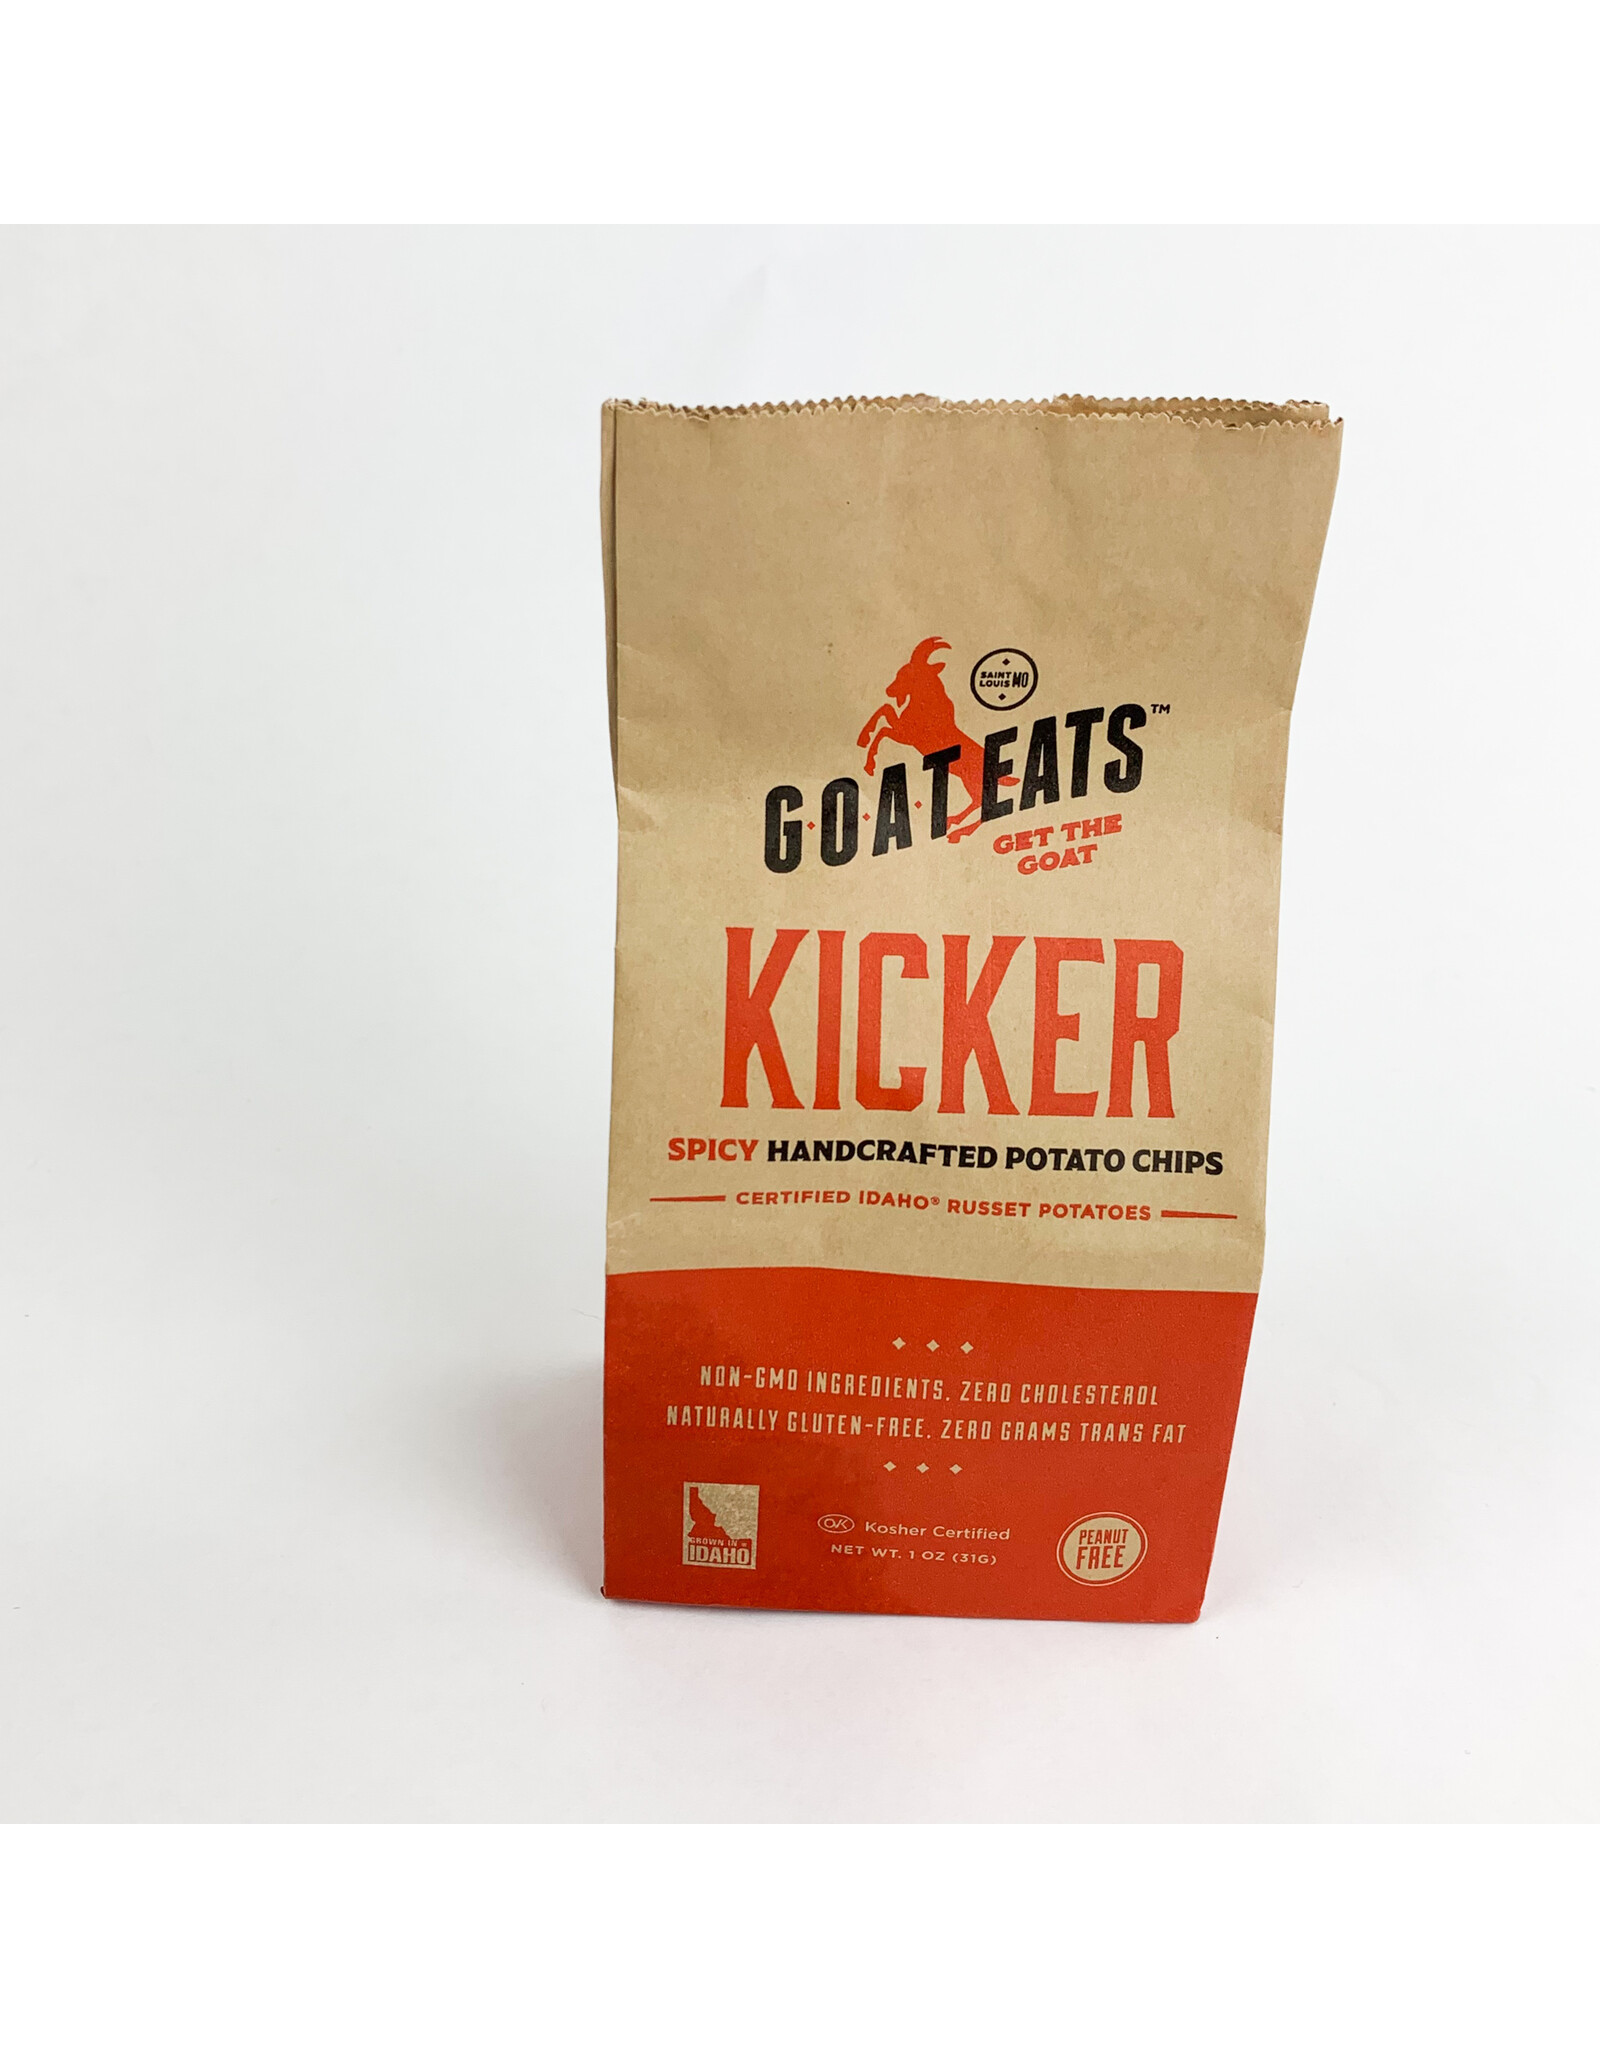 The G.O.A.T Brand Kicker Potato Chips